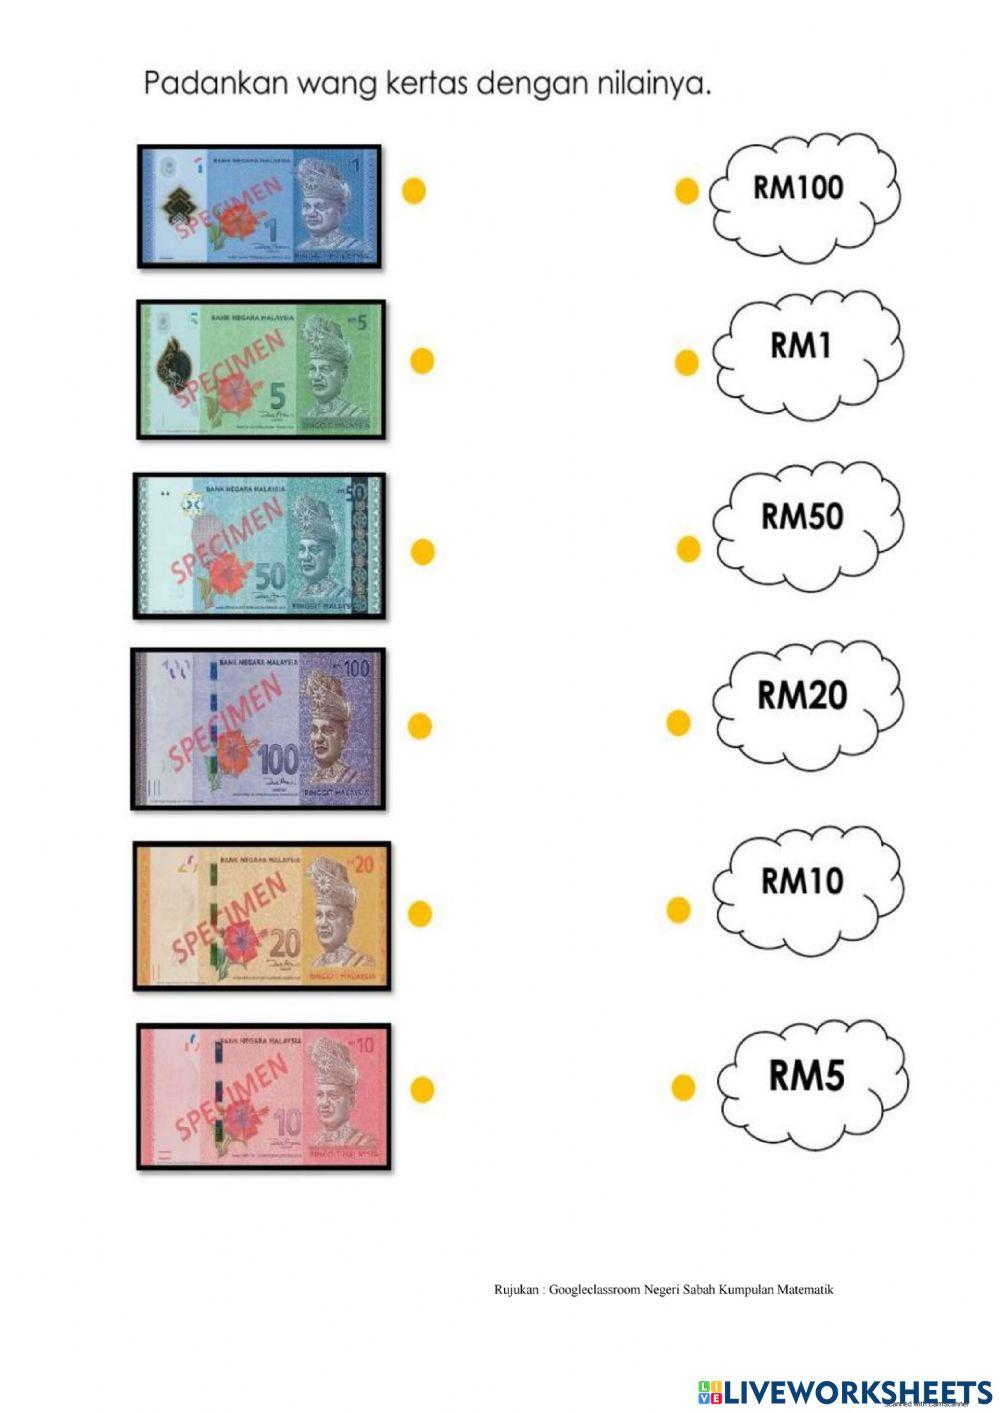 Mata wang malaysia